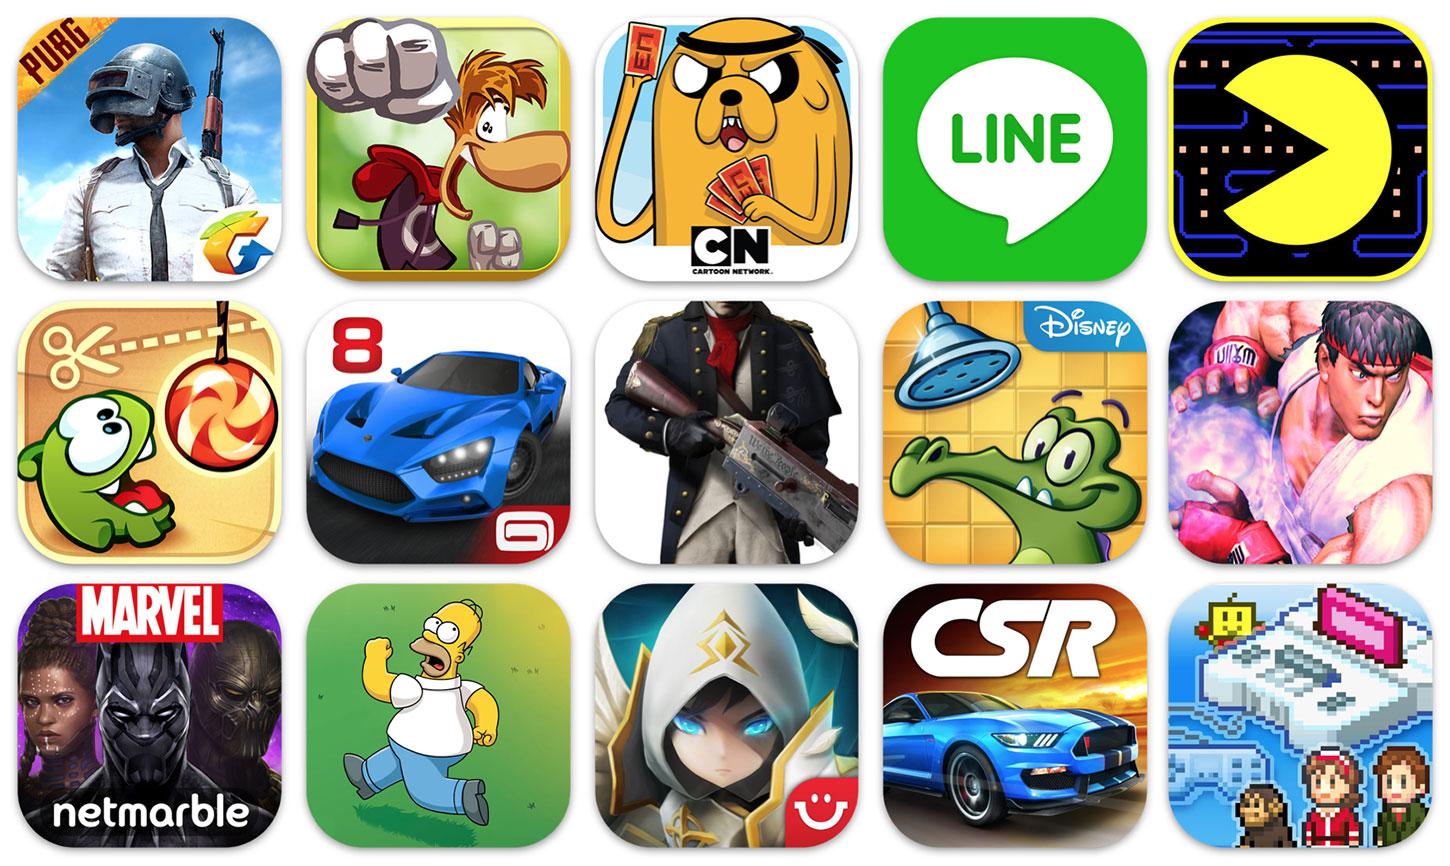 Cartoon Network App na App Store